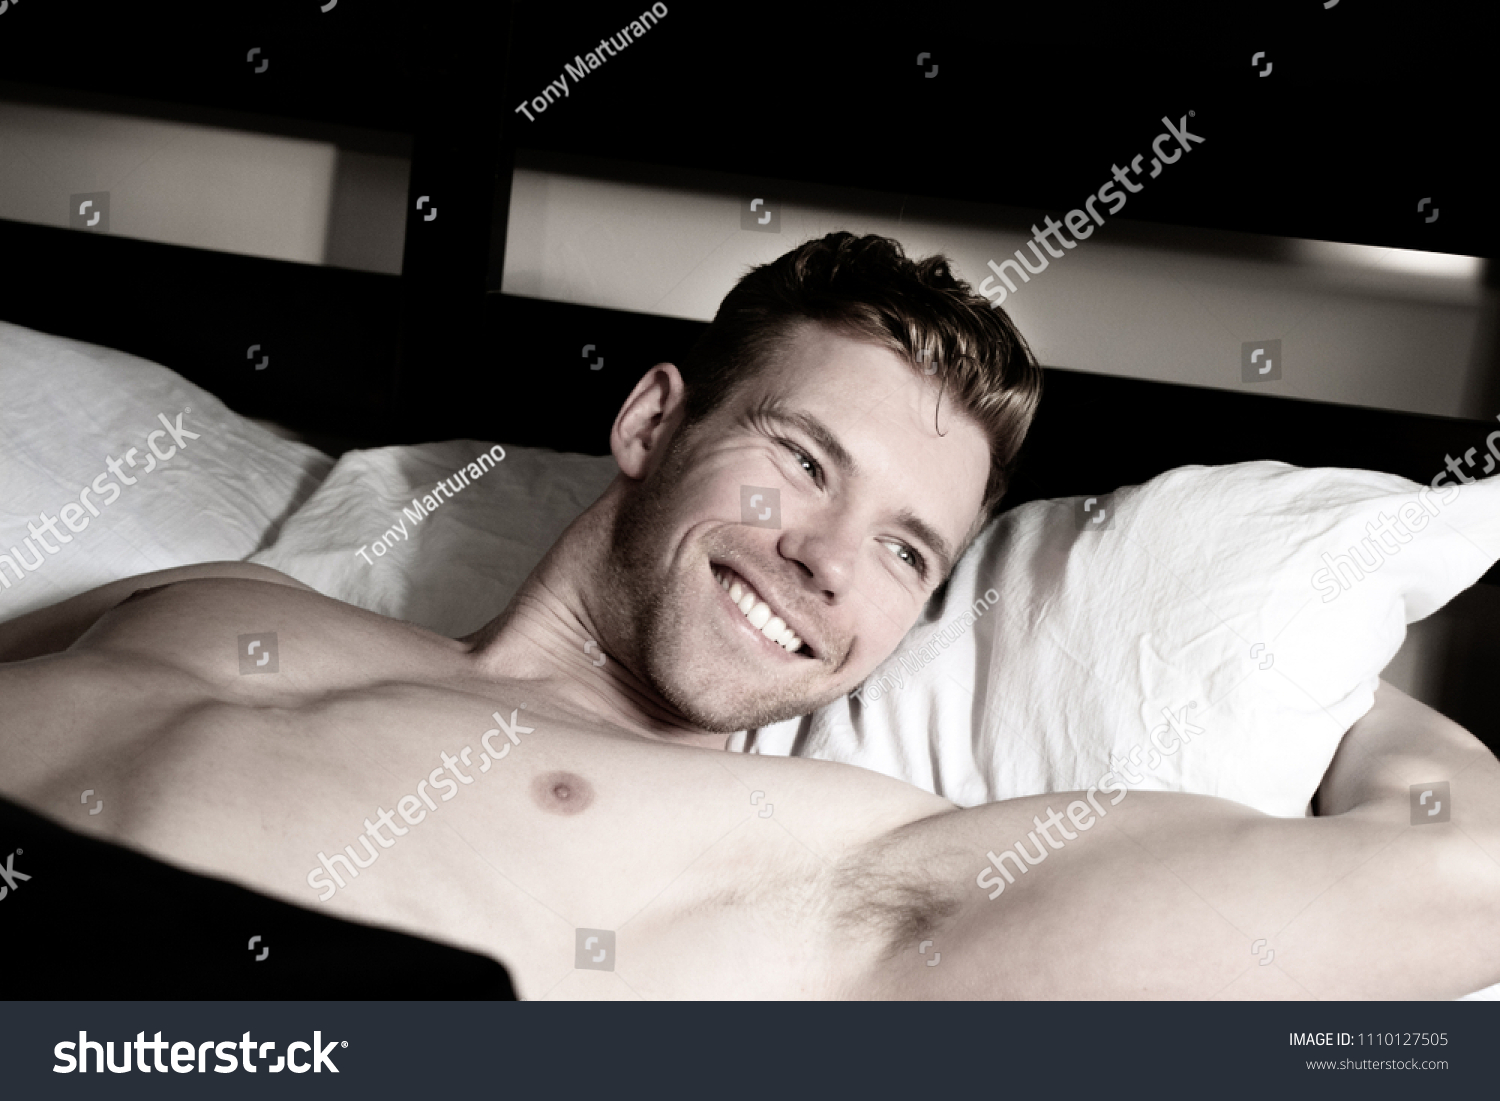 hot guy selfie bed sexy photo